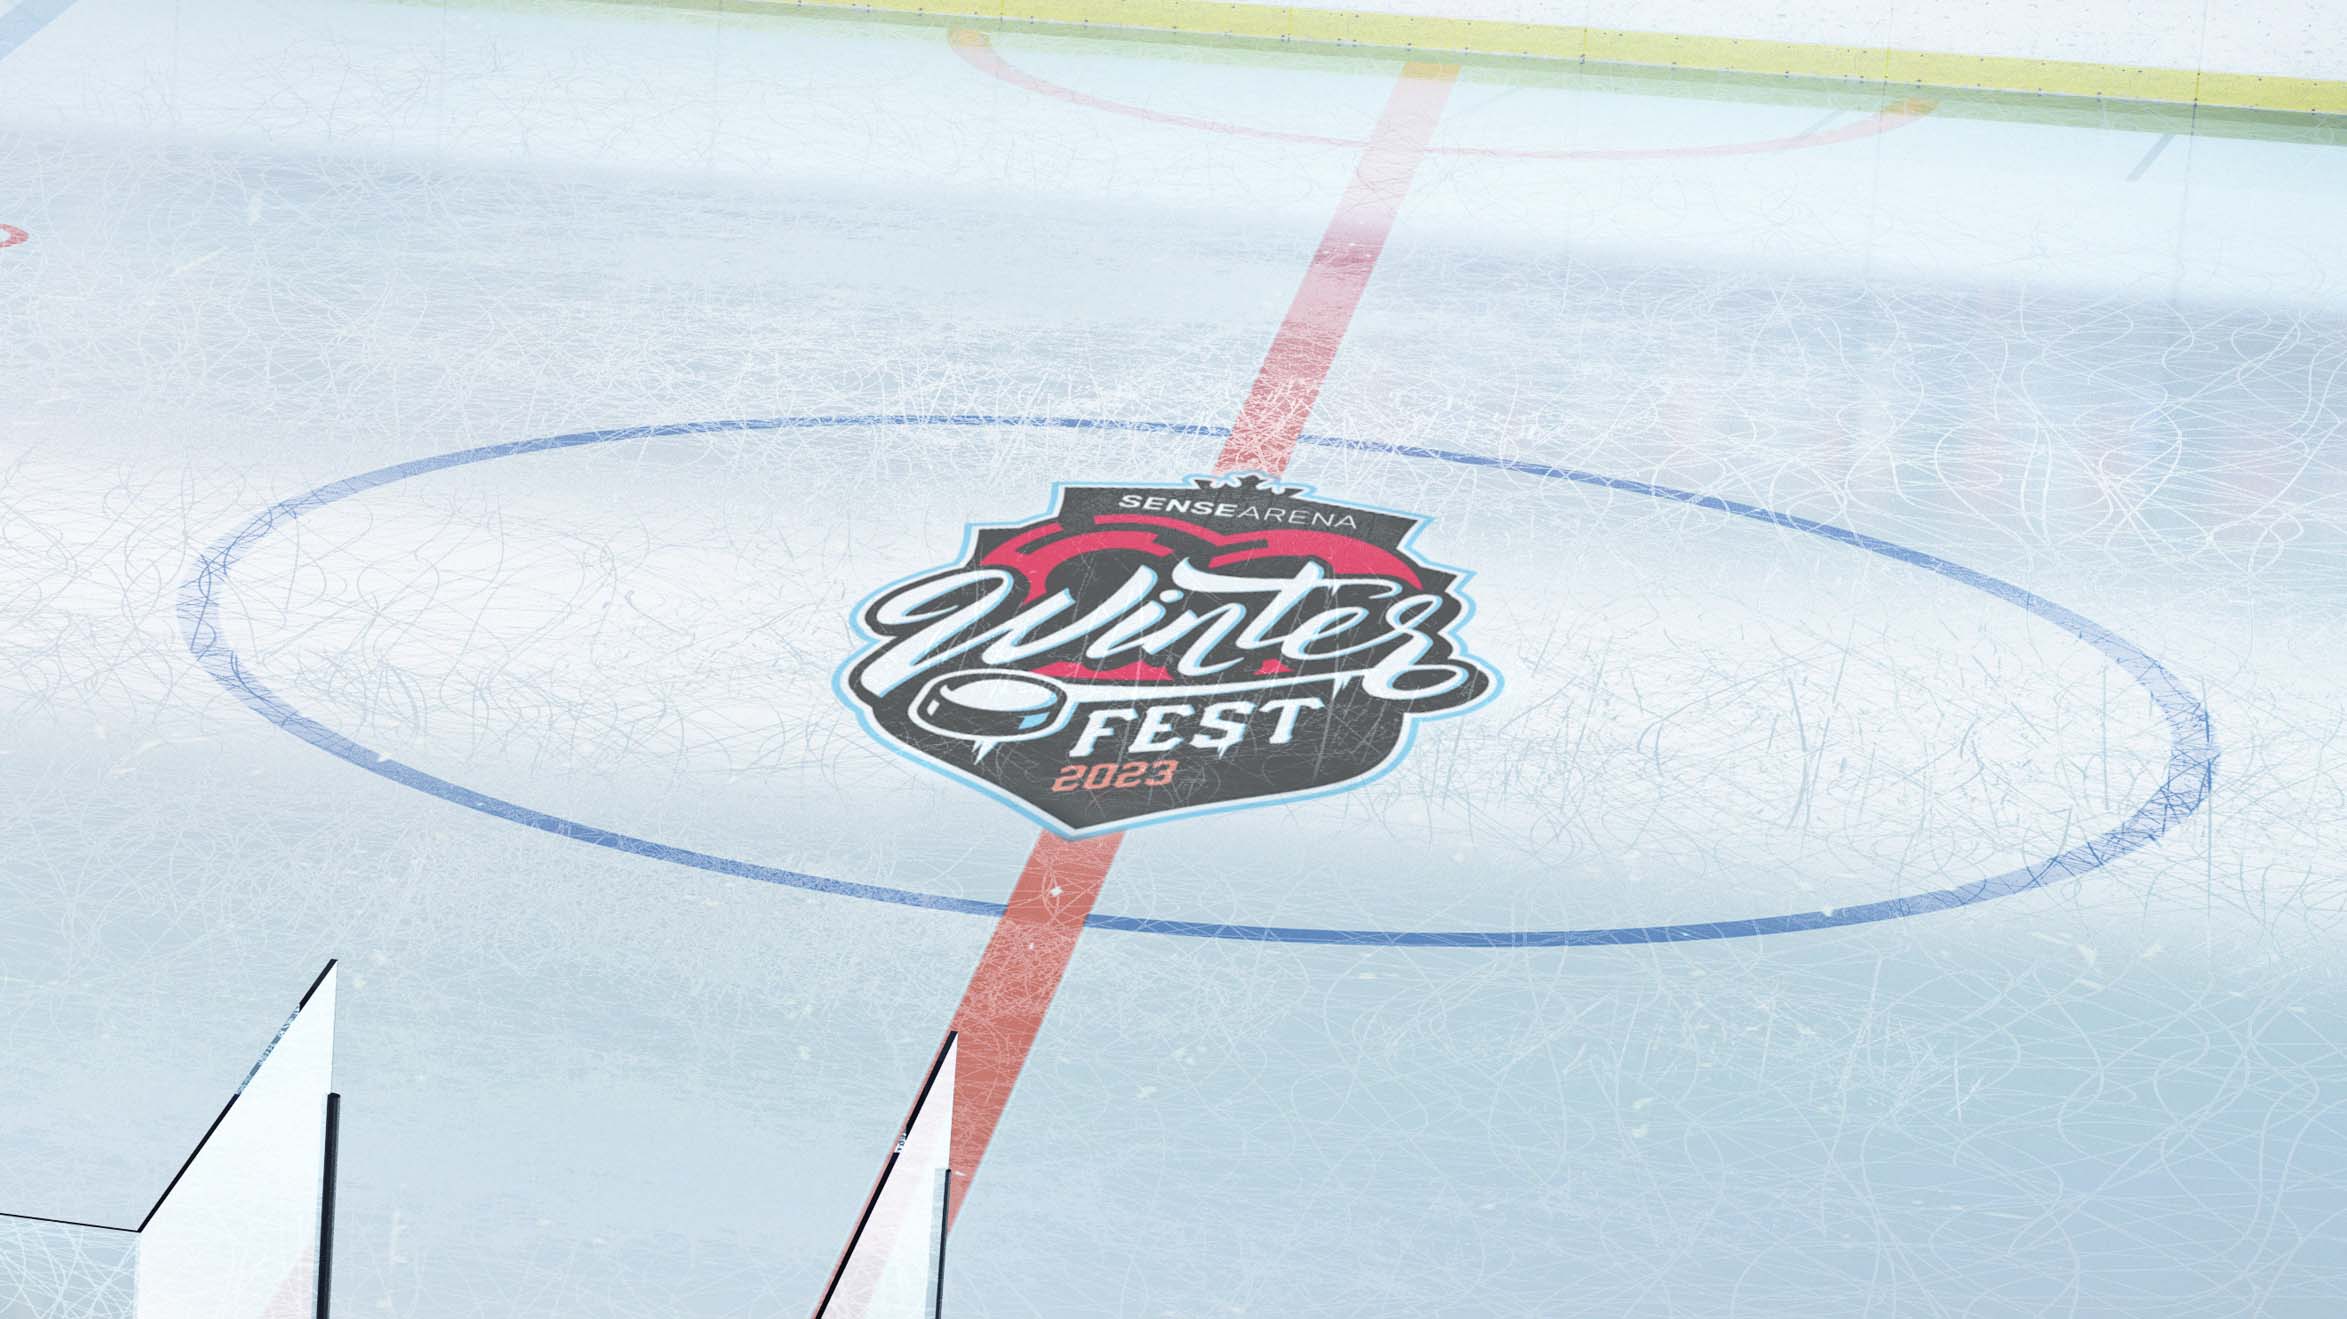 Winter Fest logo on ice